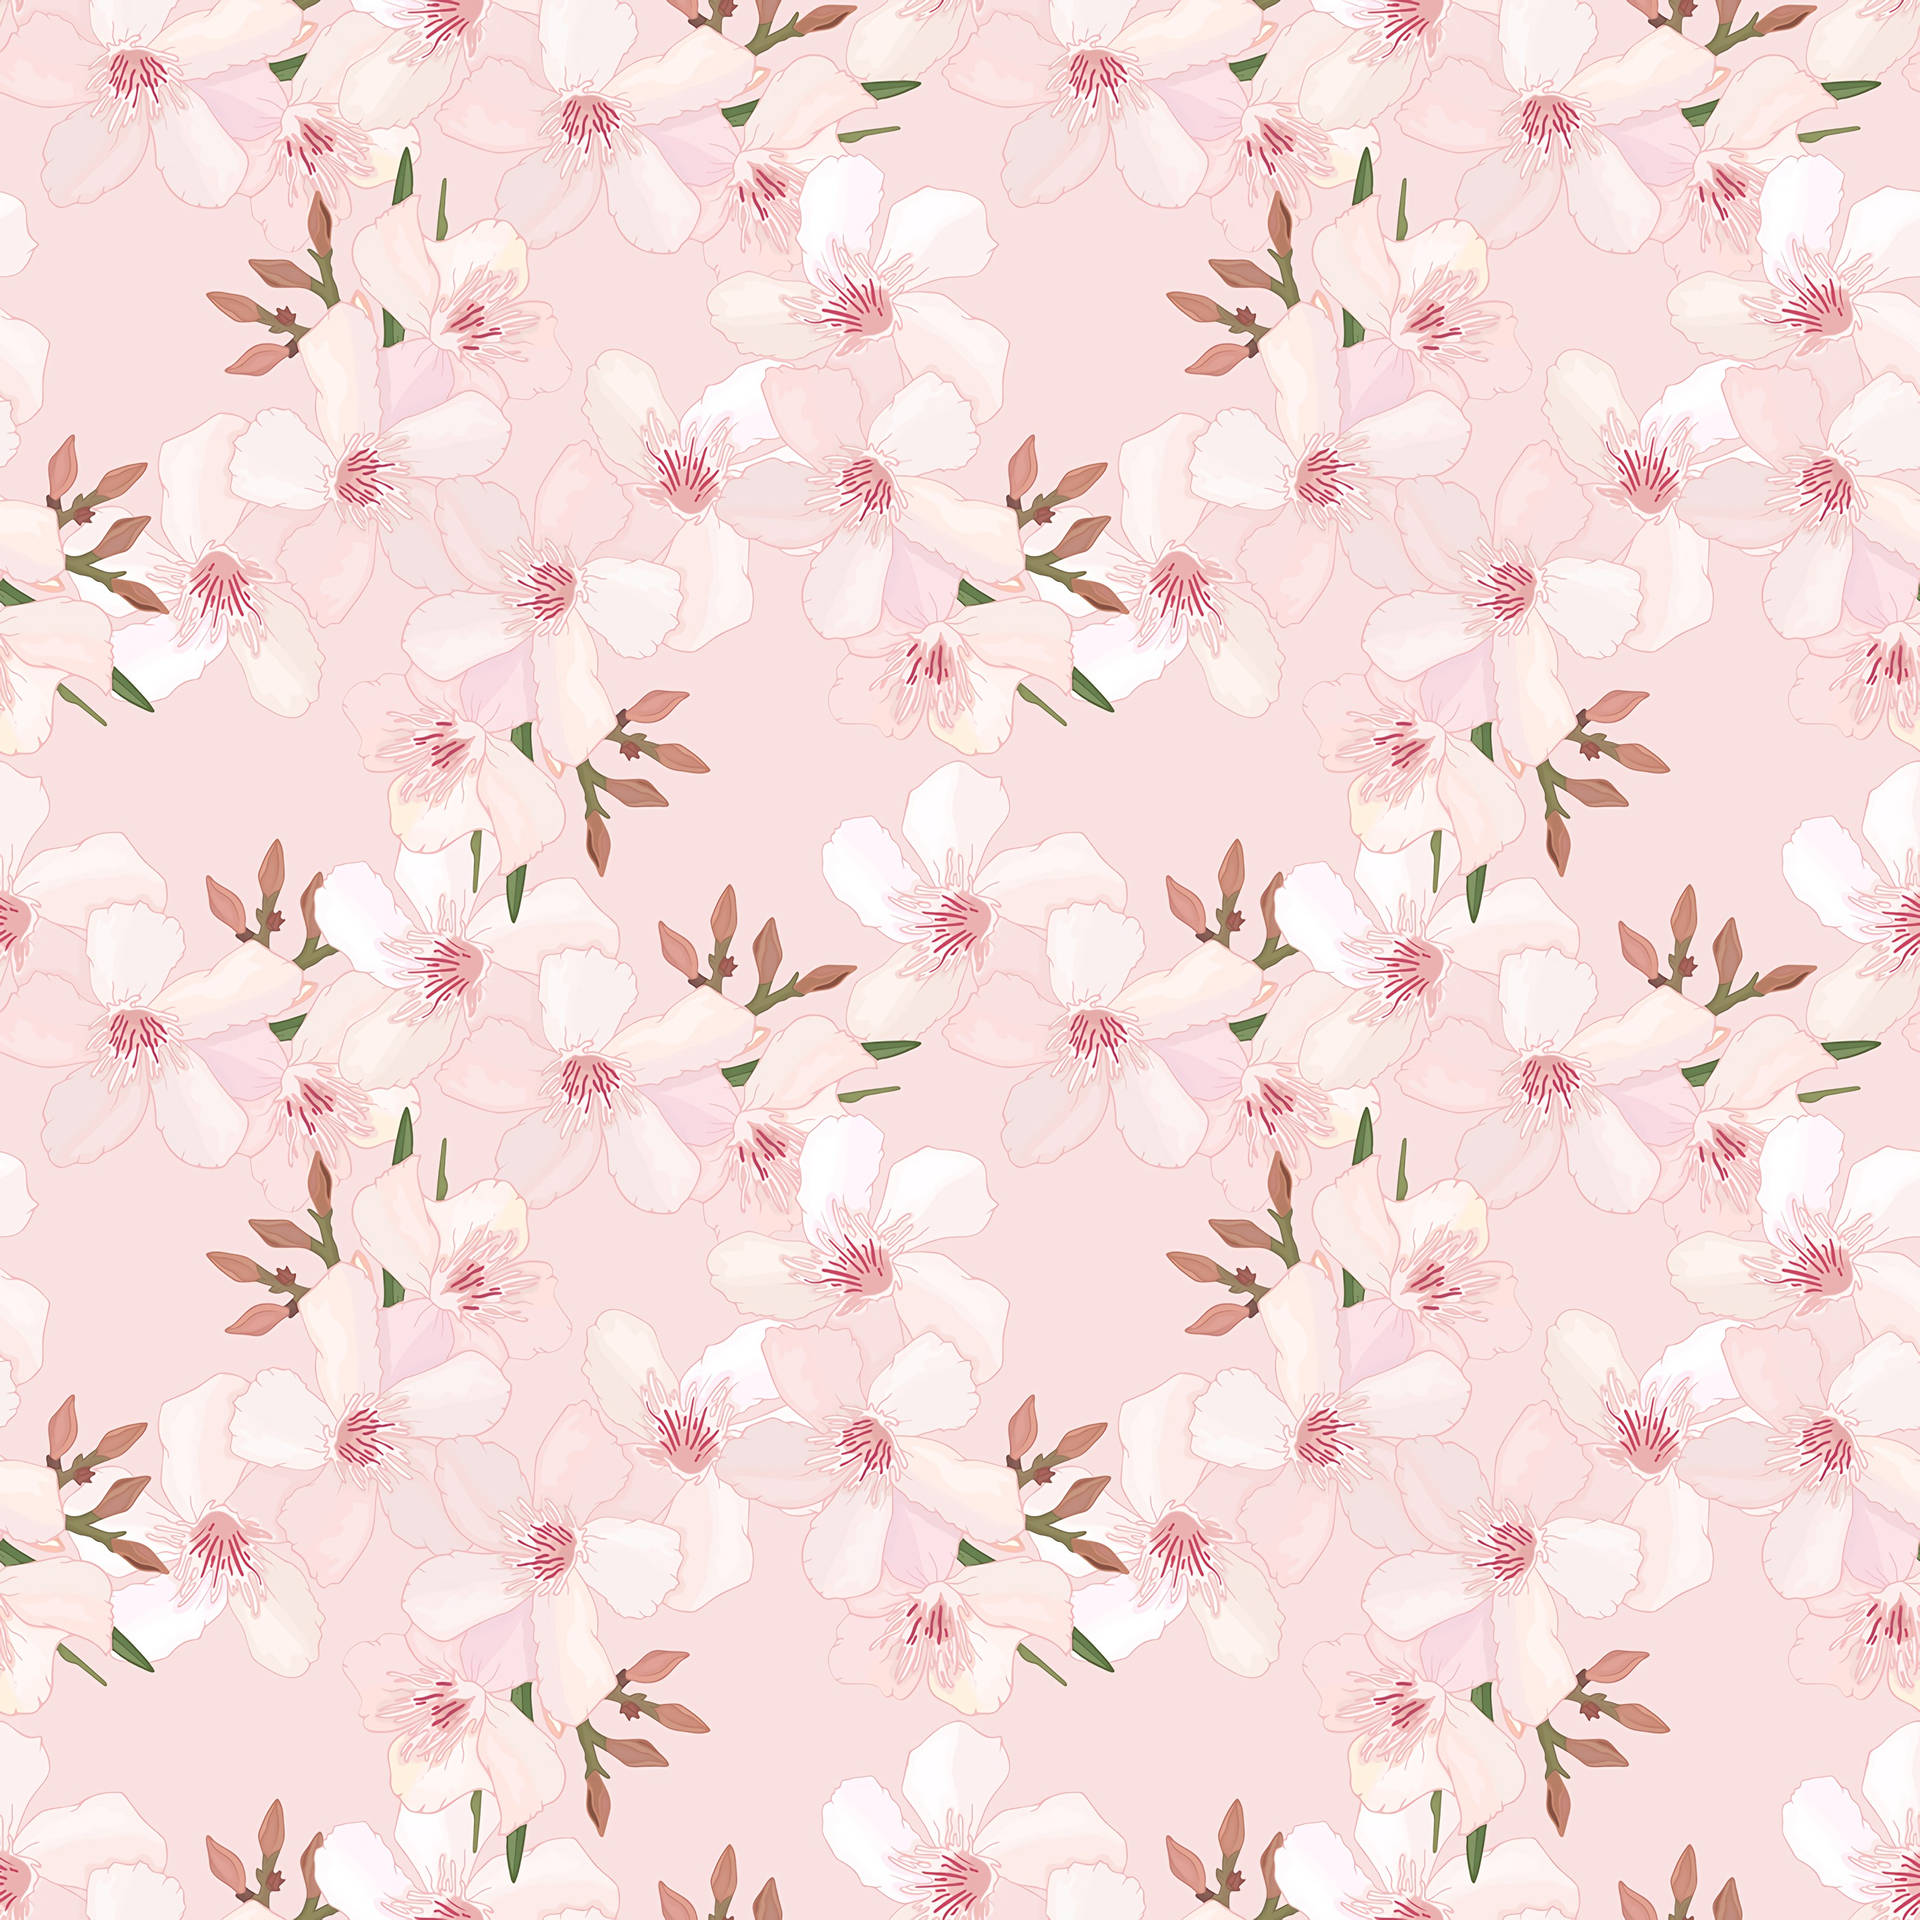 Sakura 2800X2800 Wallpaper and Background Image